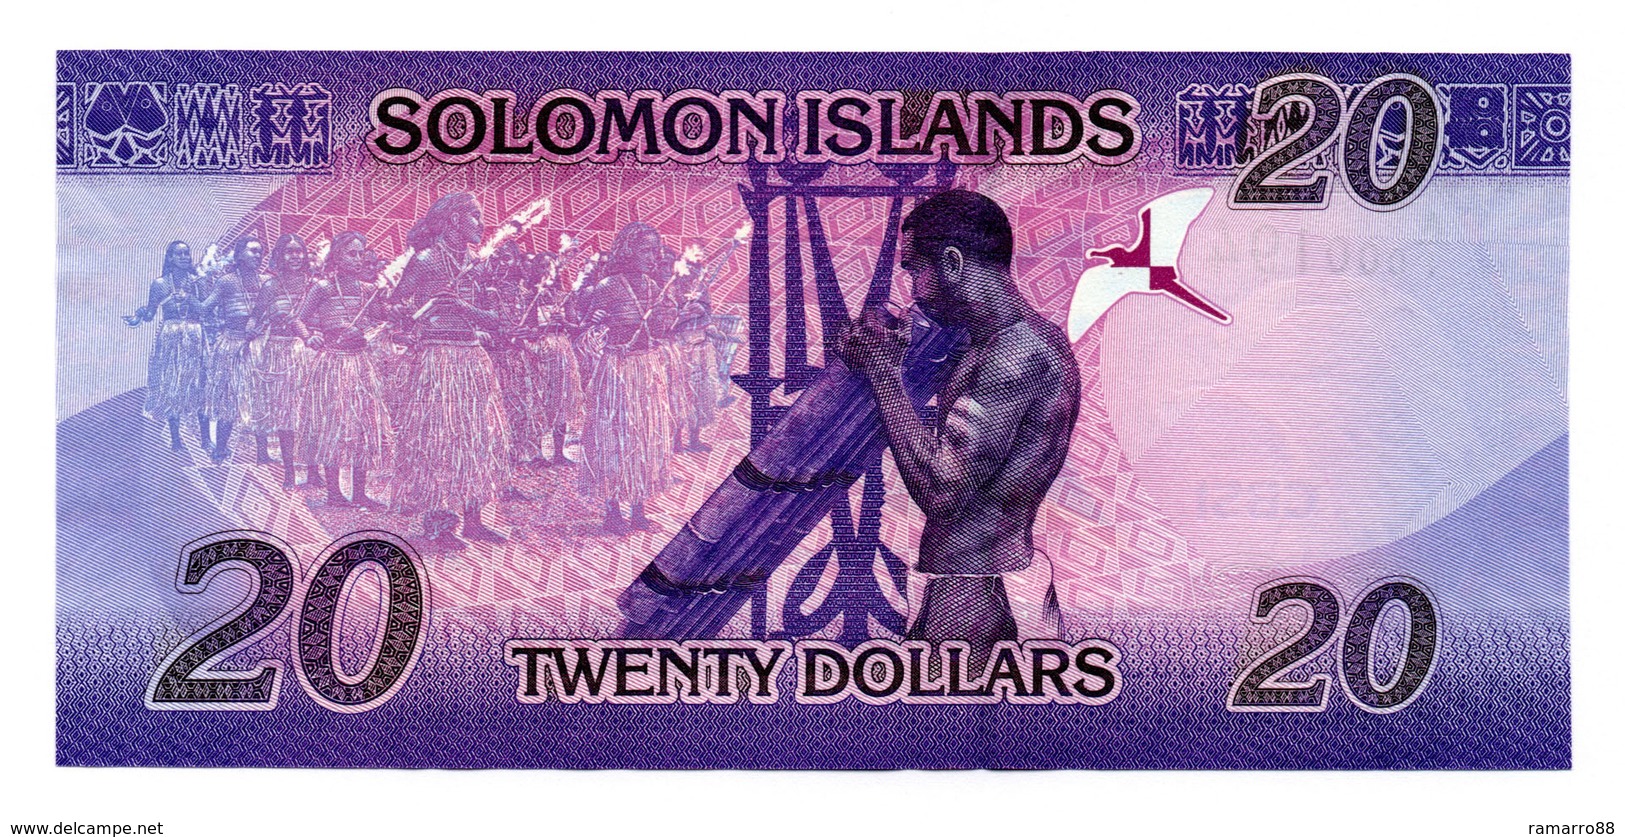 Solomon Islands 20 Dollars 2017 Pick # 34 Very Low Serial # A/1 000194 Unc - Solomon Islands